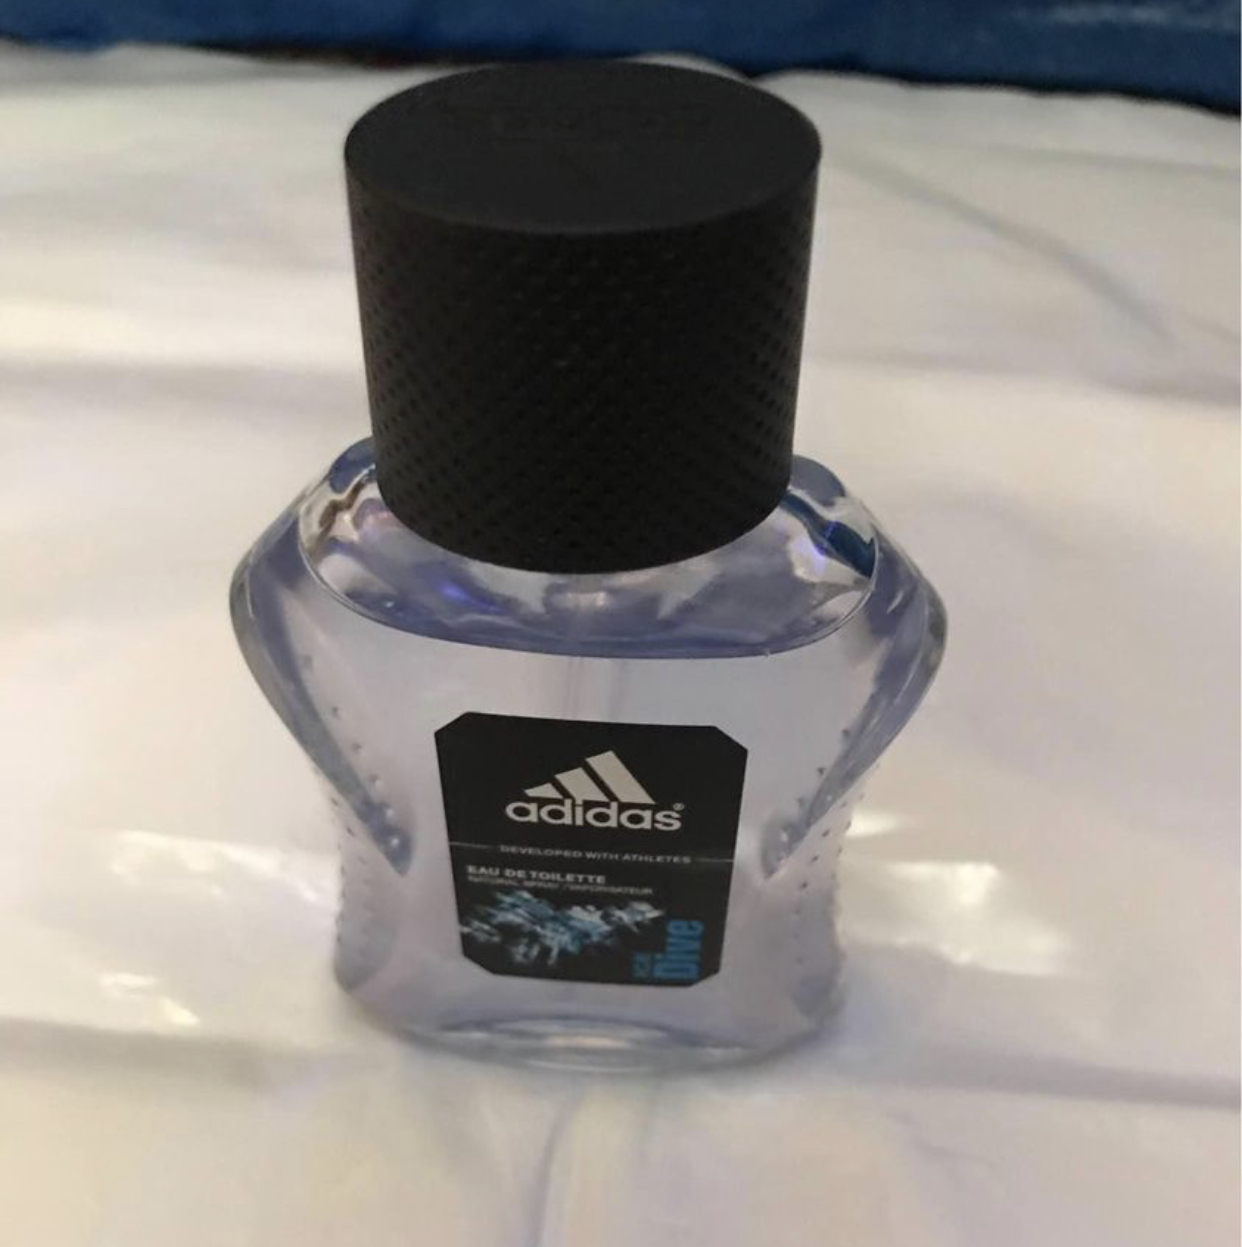 Adidas Ice Dive perfume